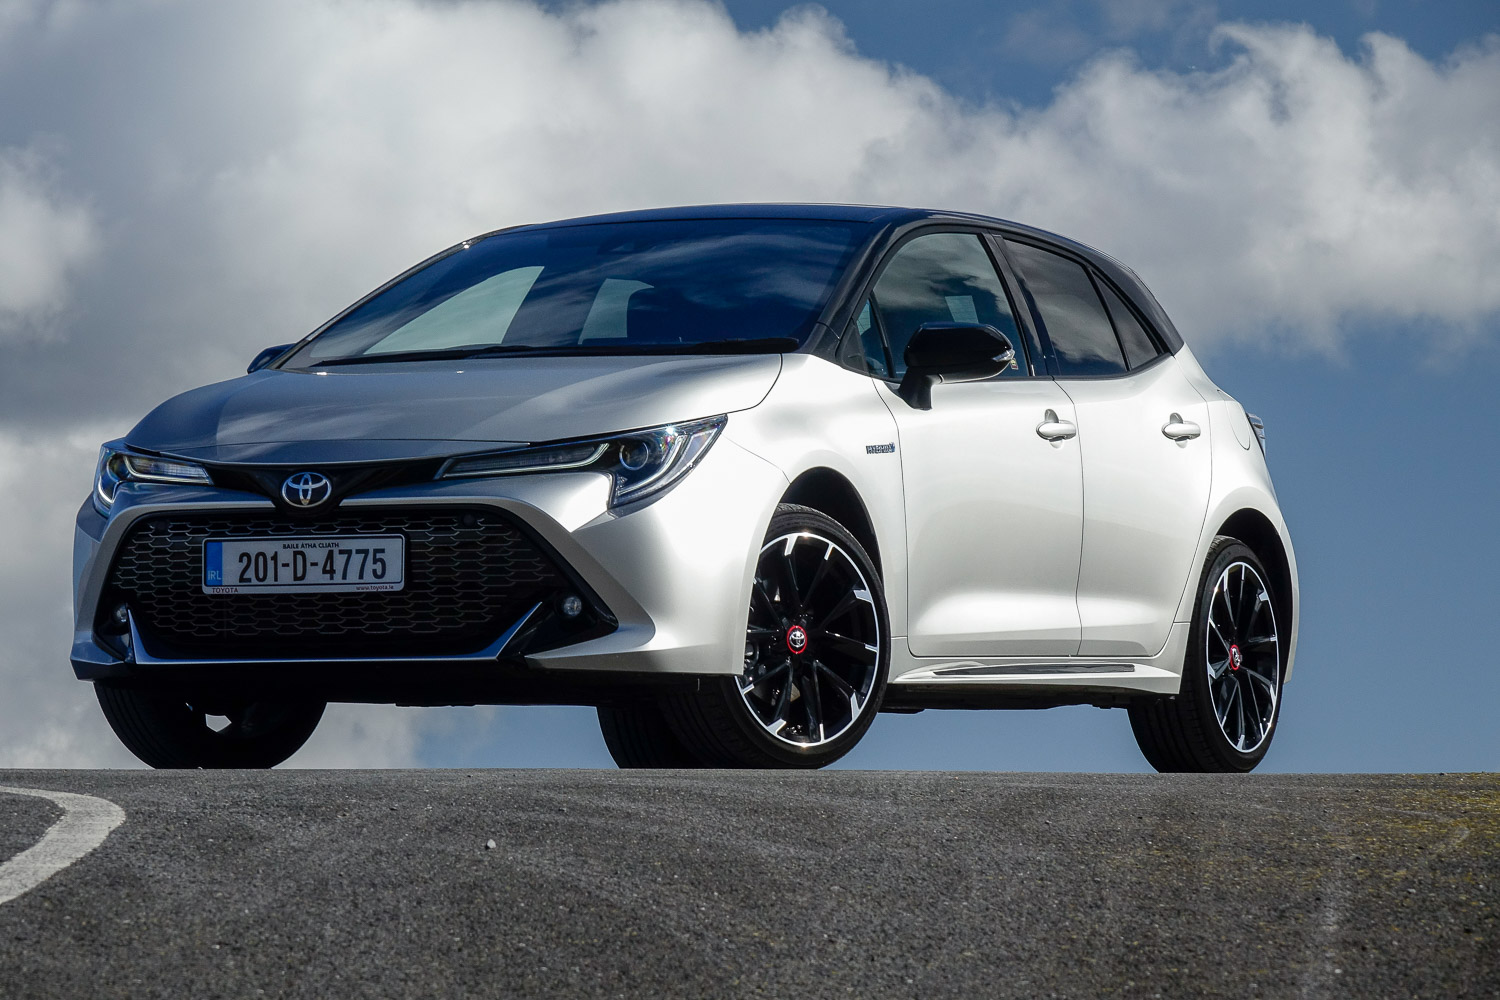 Toyota Corolla 2.0 Hybrid GR Sport (2020), Reviews